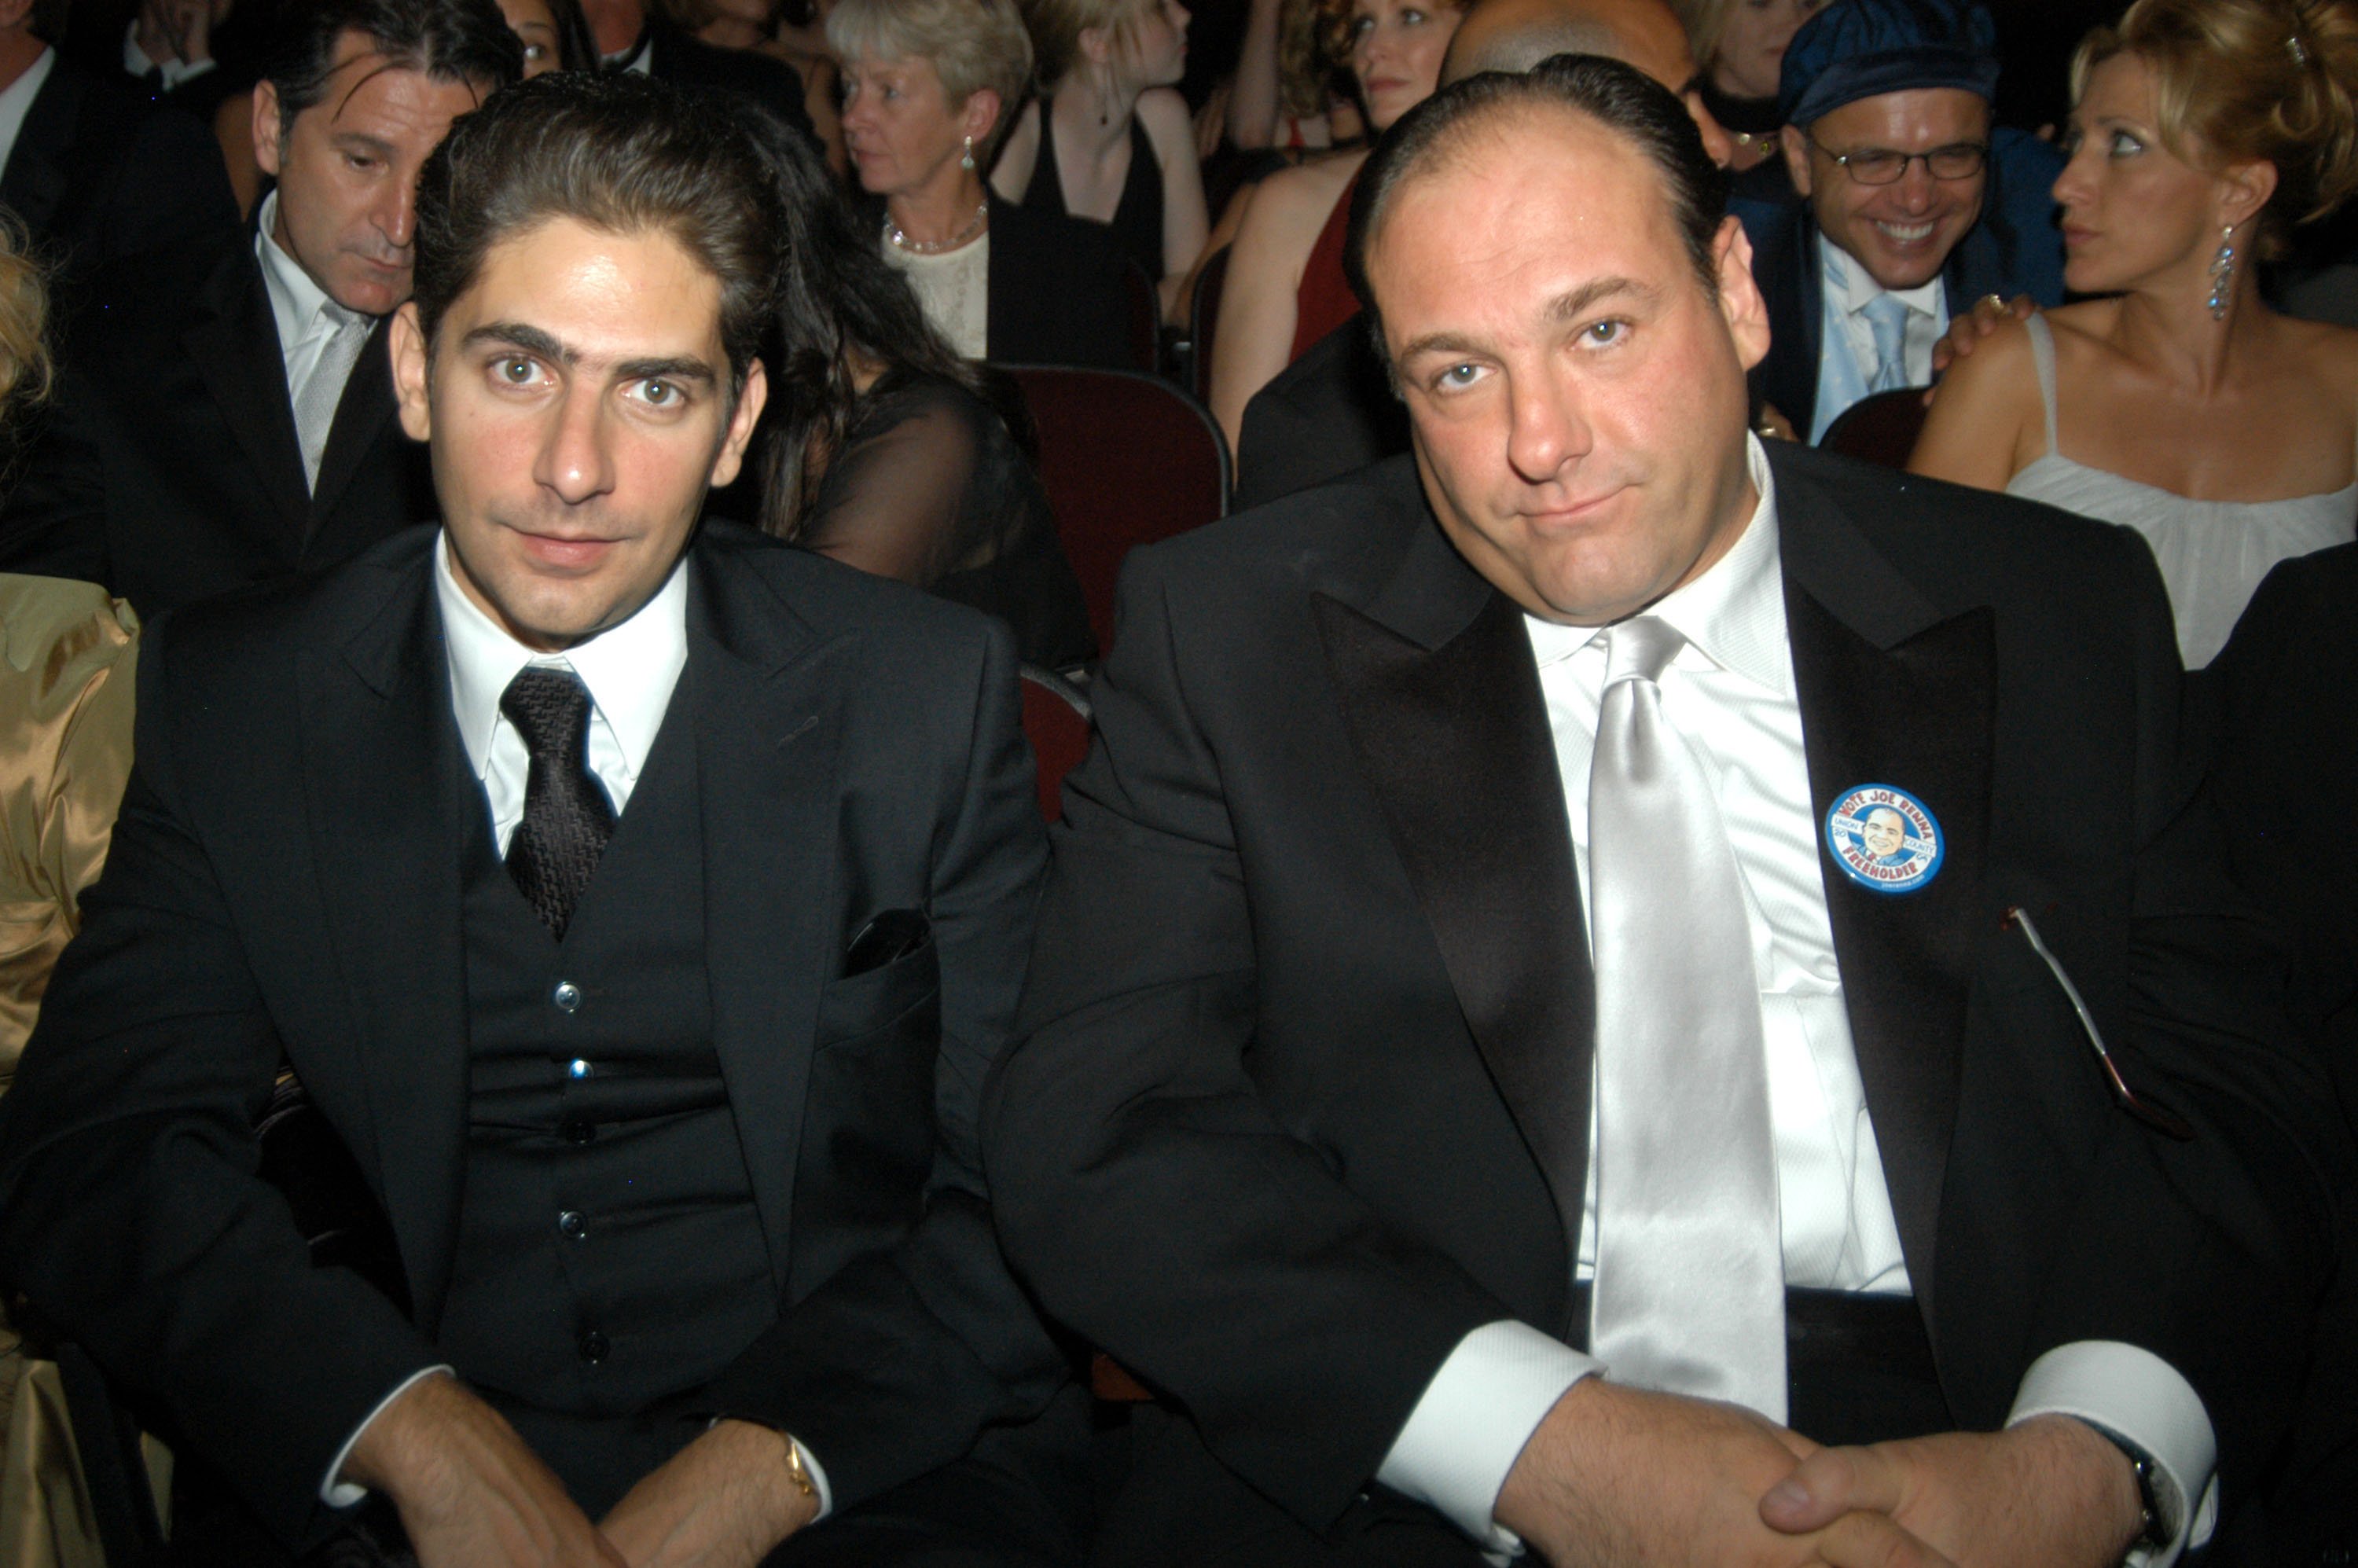 Michael Imperioli and James Gandolfini during 55th Annual Primetime Emmy Awards